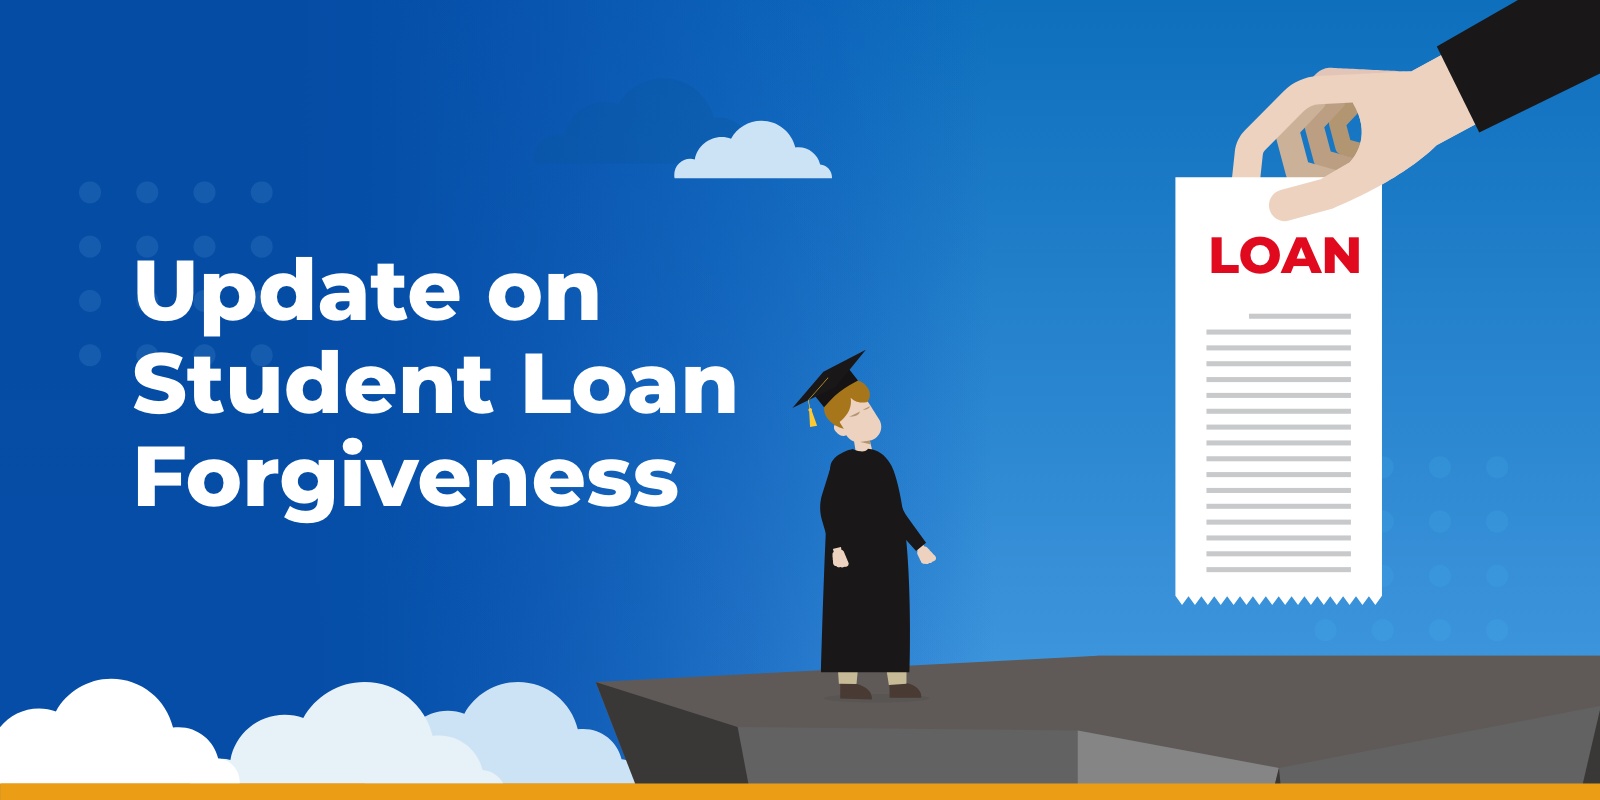 An Update on Student Loan Forgiveness